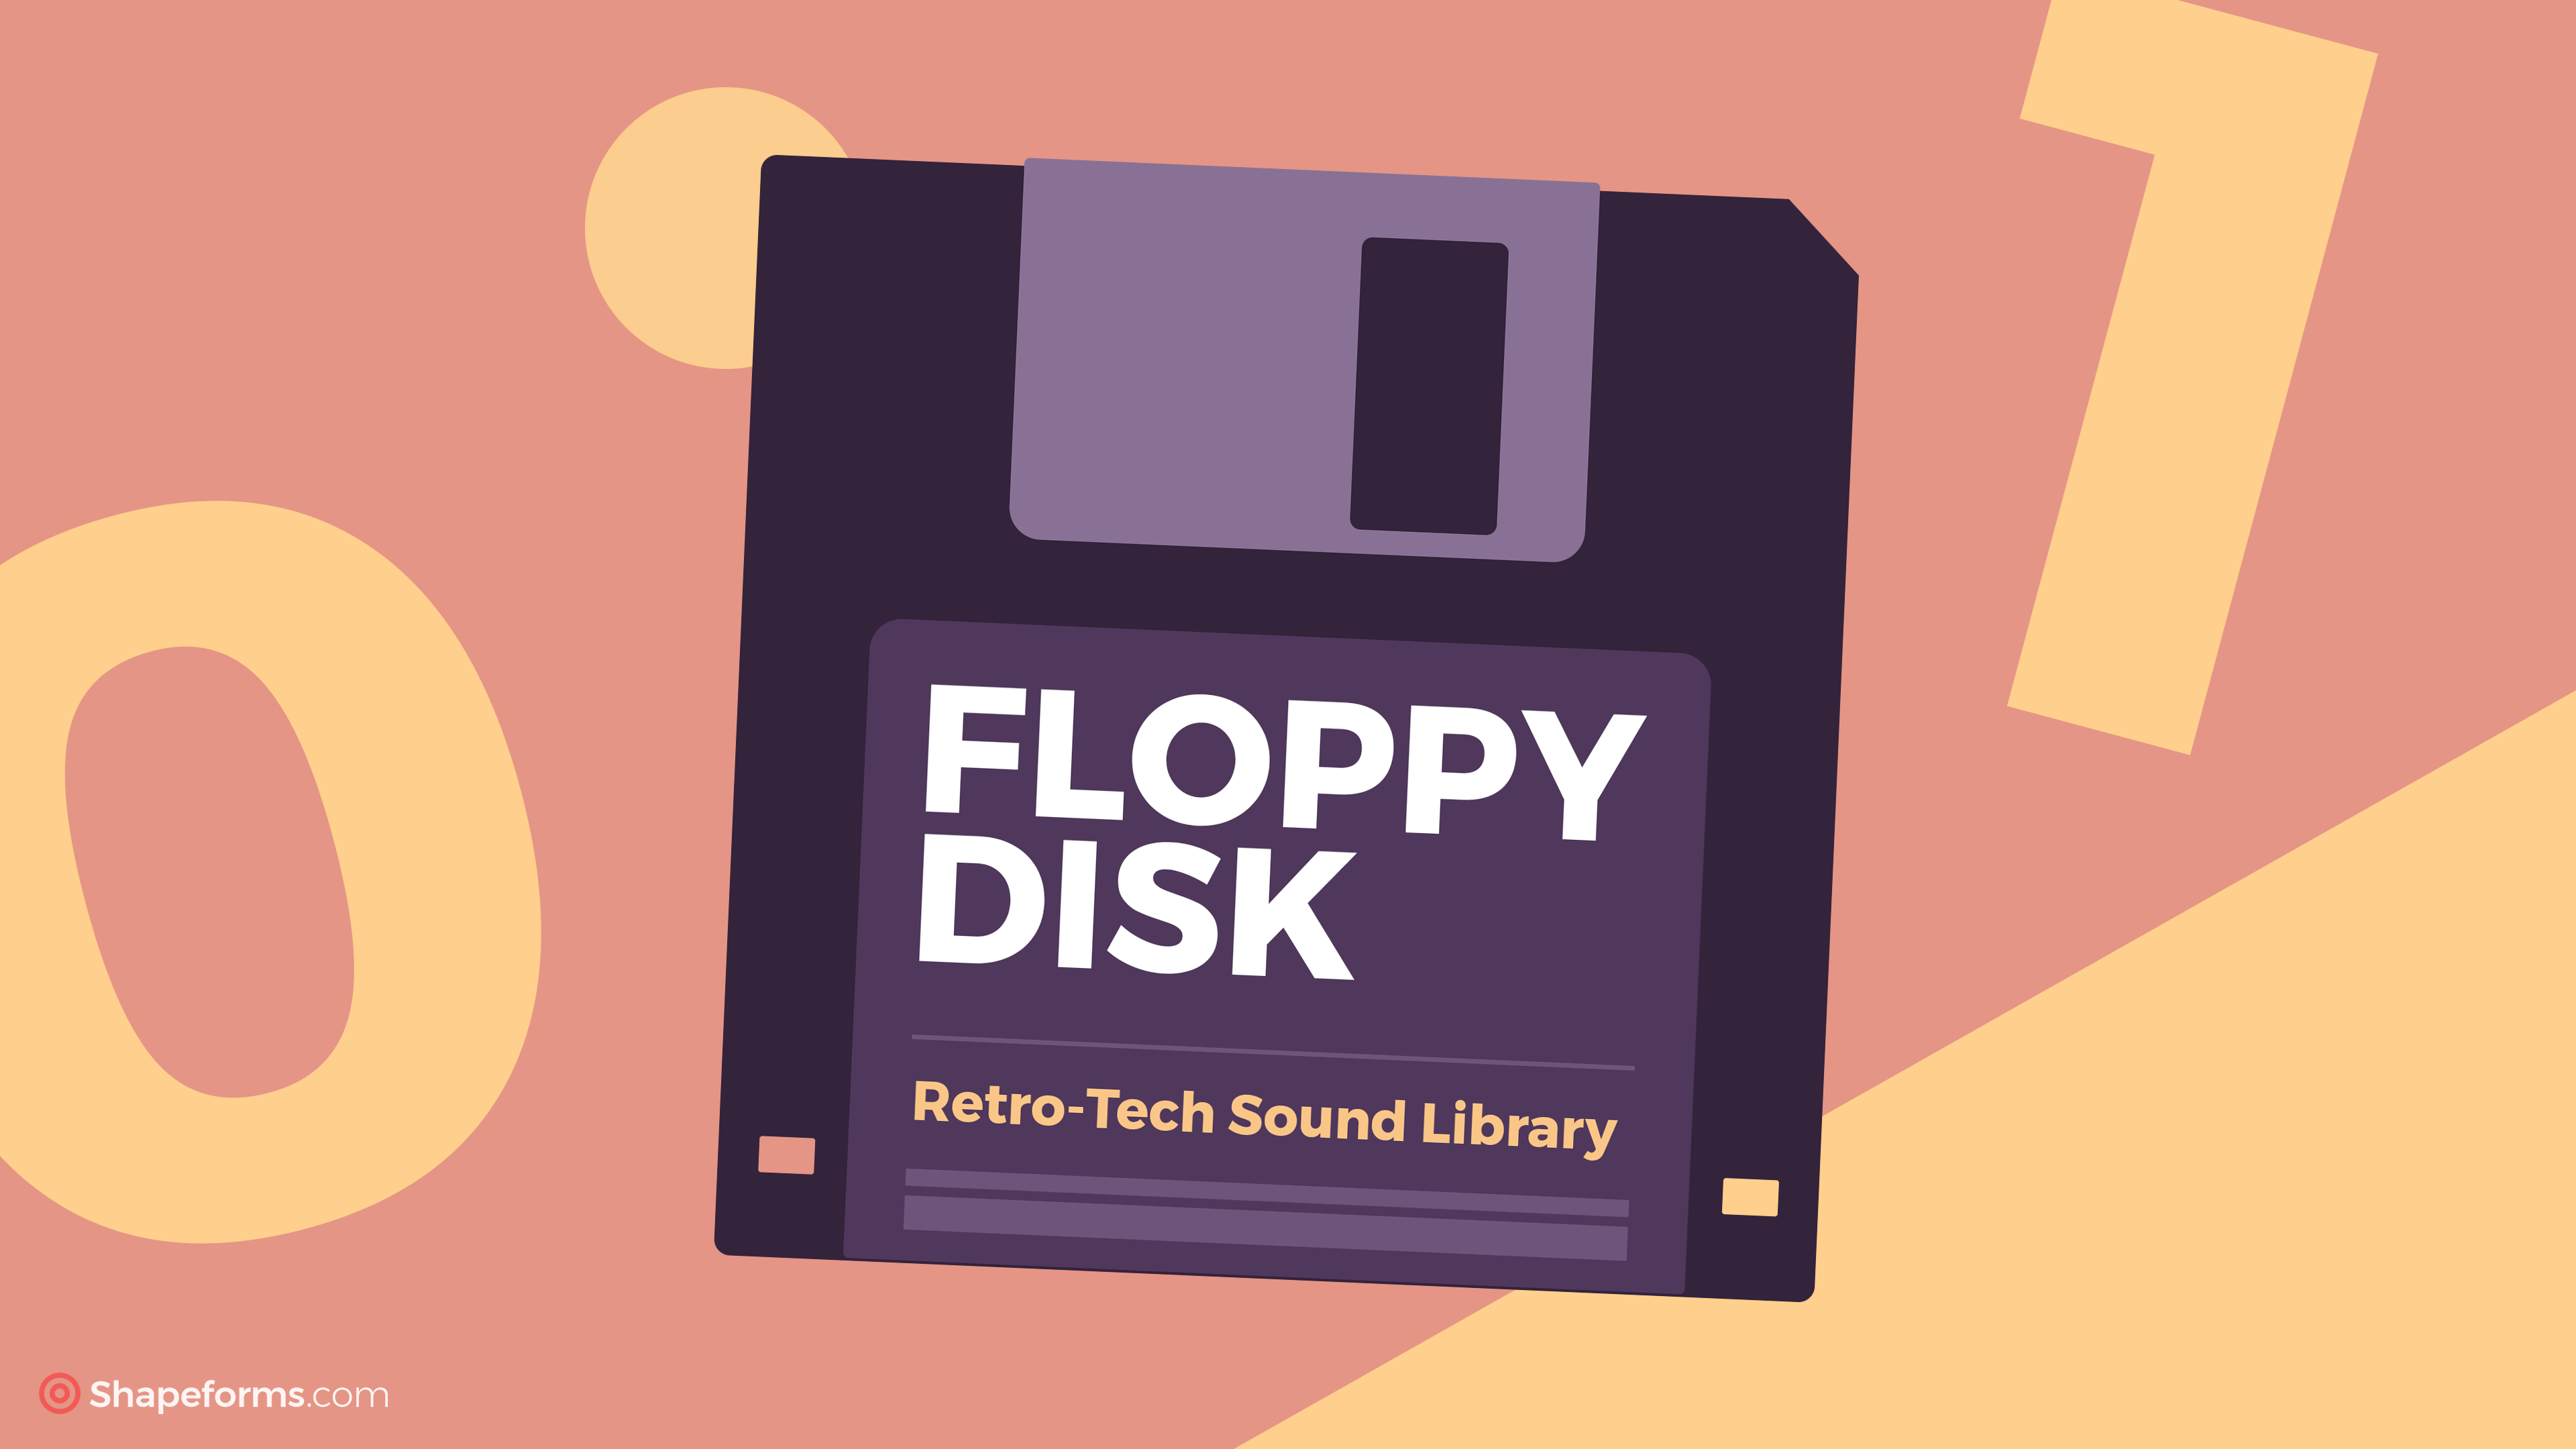 Floppy Disk Retro-Tech Sound Library